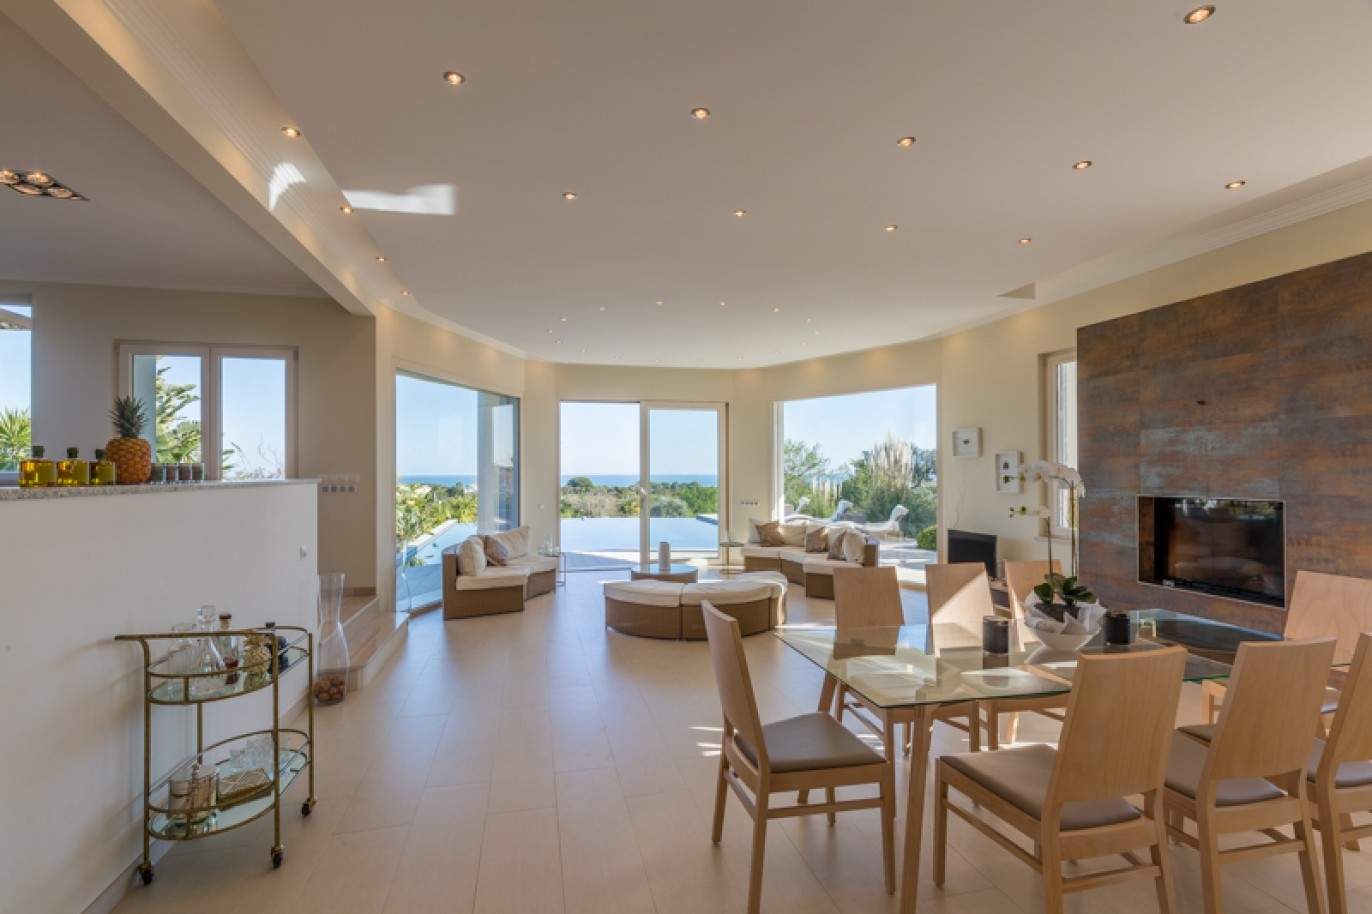 Villa for sale, with sea view, near beach and golf, Algarve, Portugal_76416